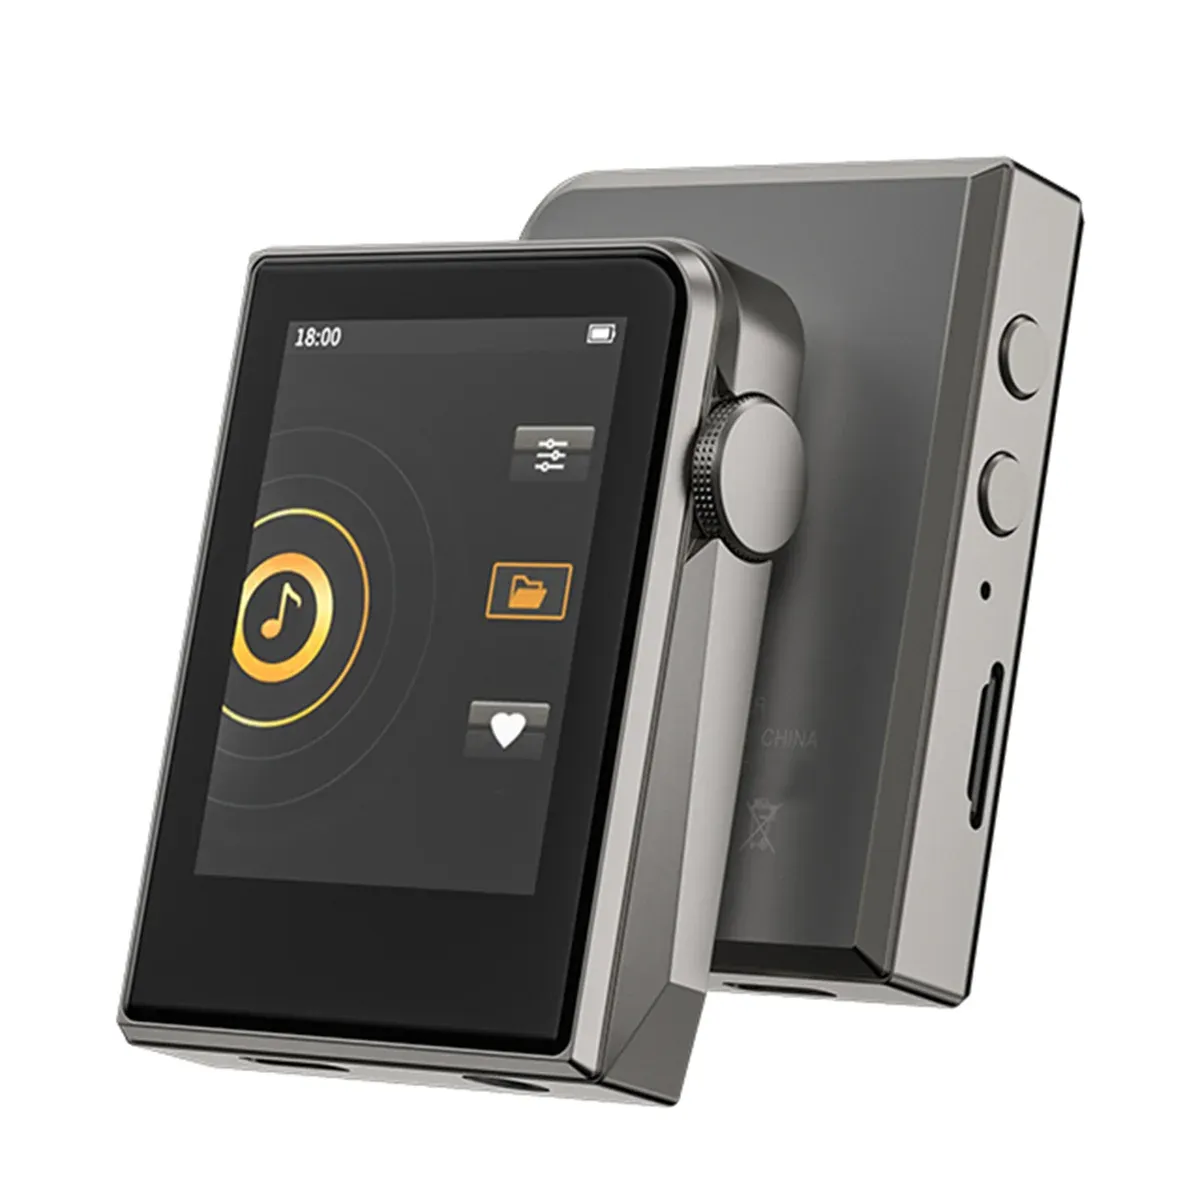 مشغل Player Ruizu A58 Bluetooth MP3 Player Hifi Music Player DSD256 Dossisting Decoding Walkman Support